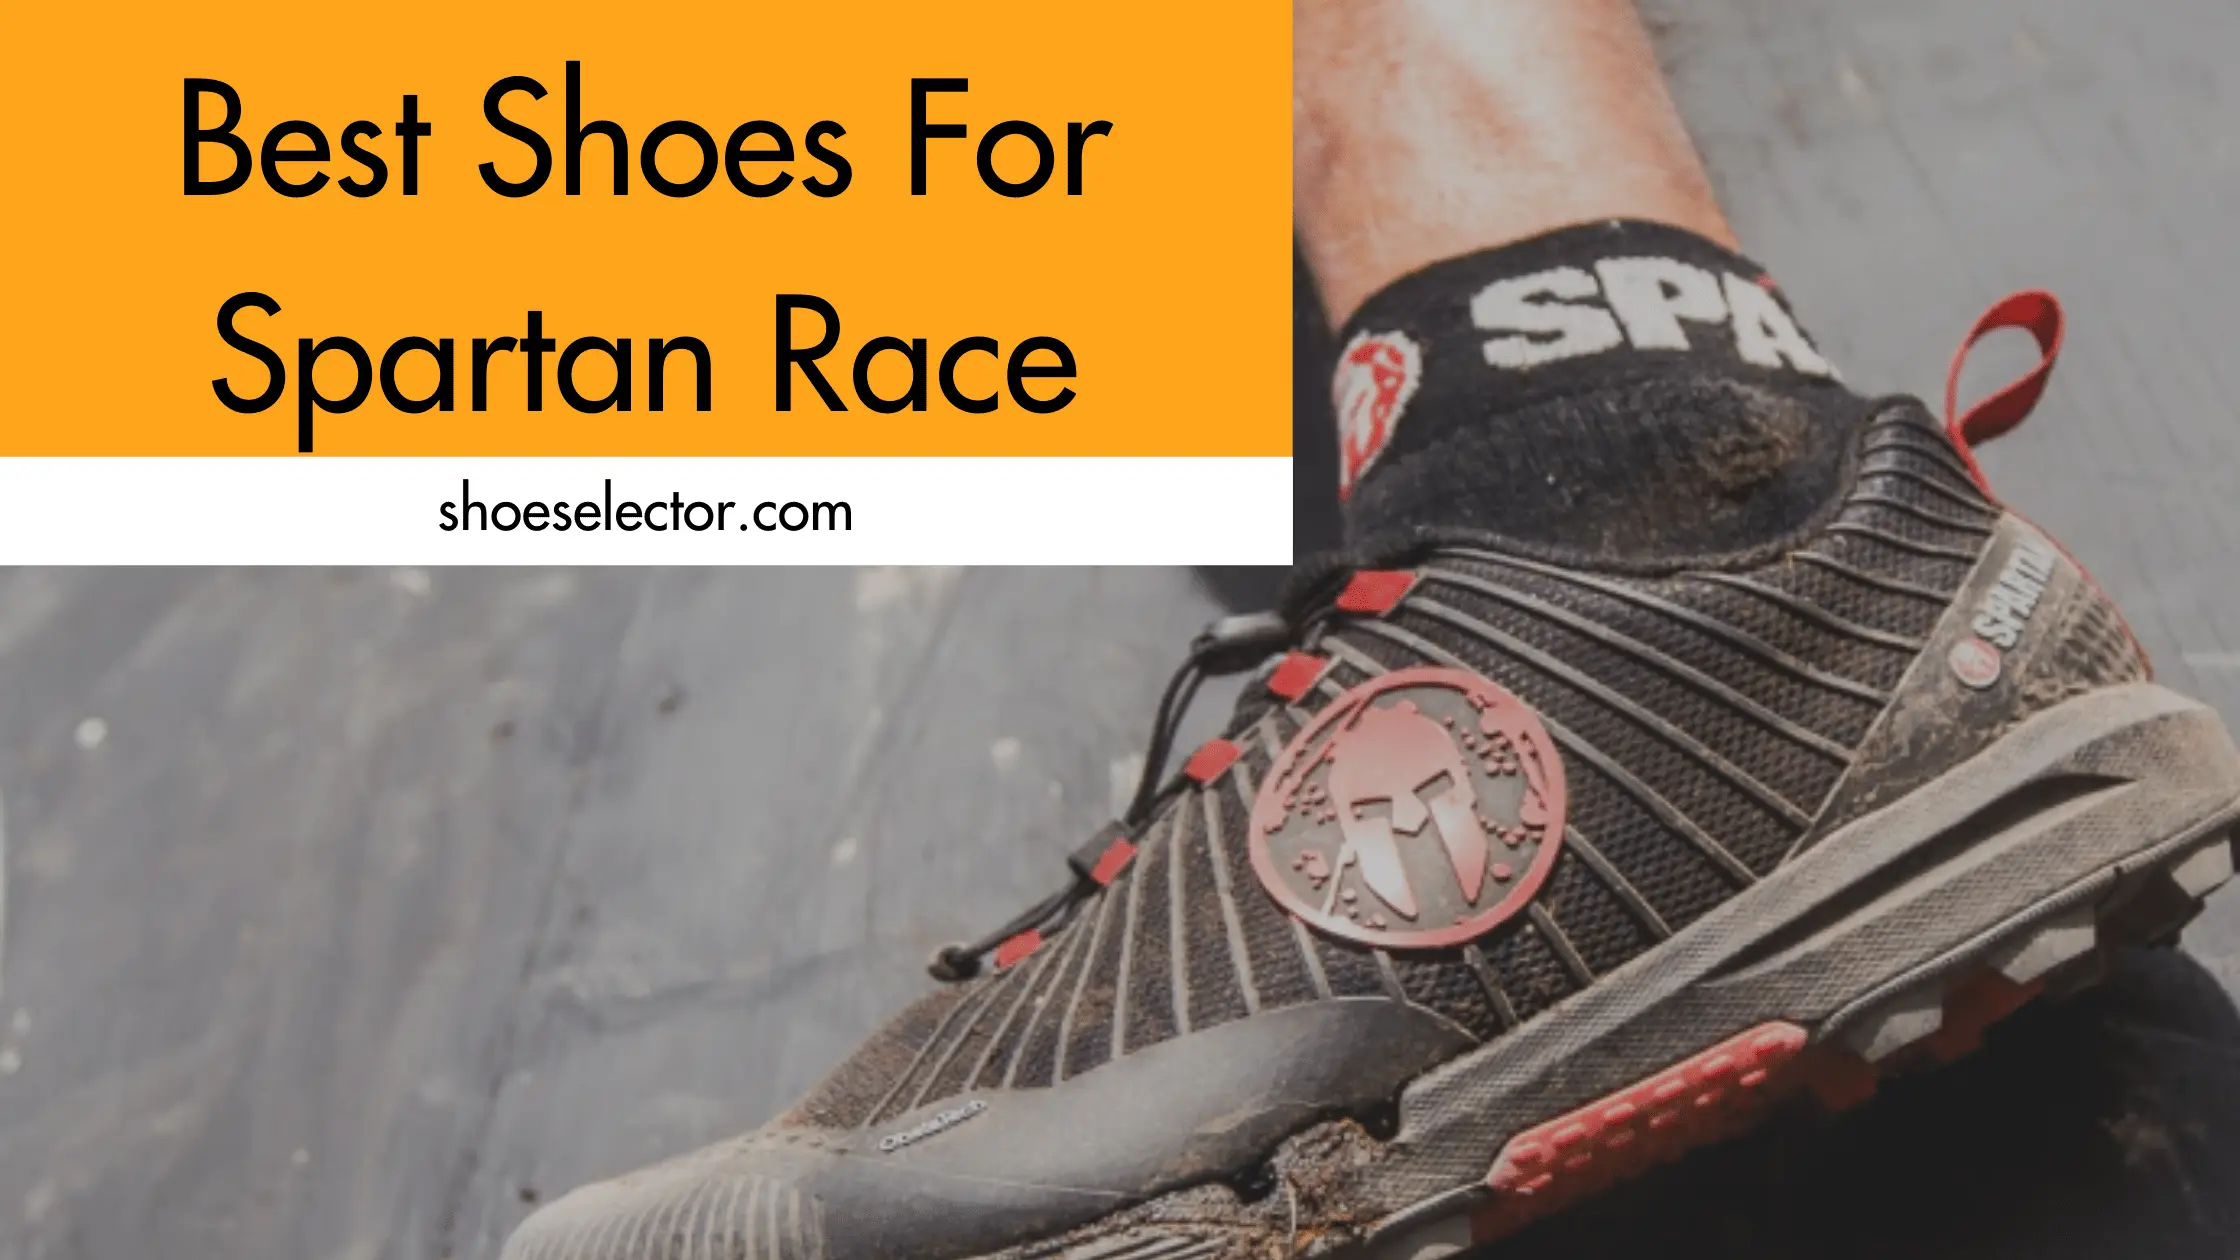 Best Shoes For Spartan Race - Expert Choice